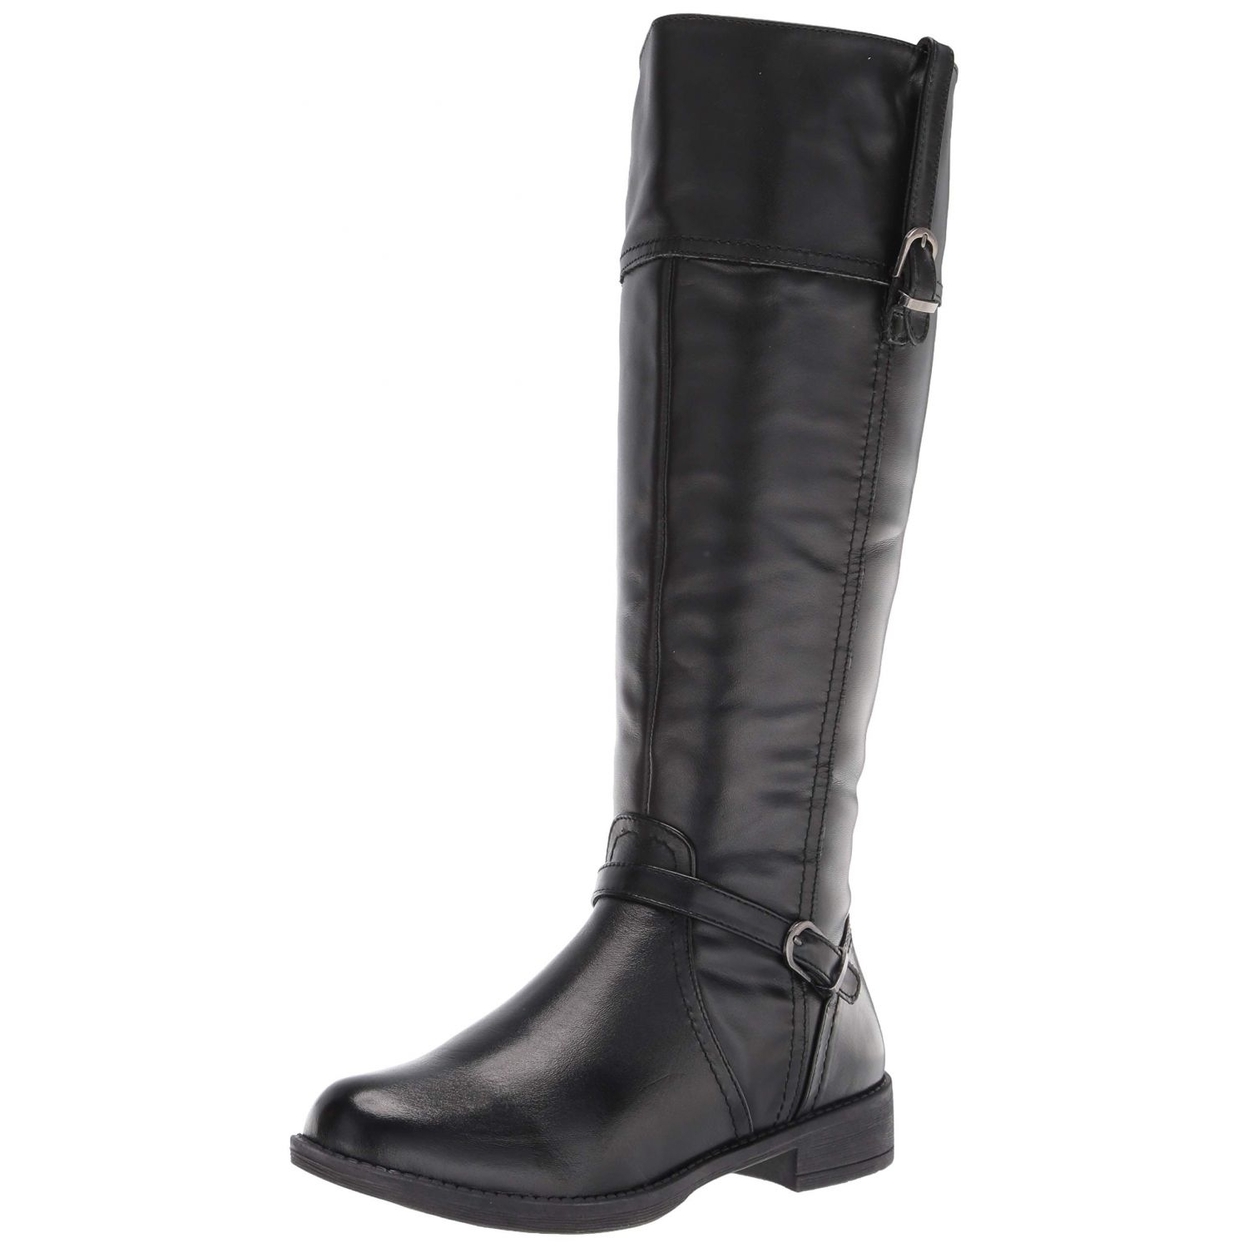 Propet Womens Tasha Zippered Casual Boots Knee High Low Heel 1-2 - Black BROWN - BROWN, 8.5 X-Wide